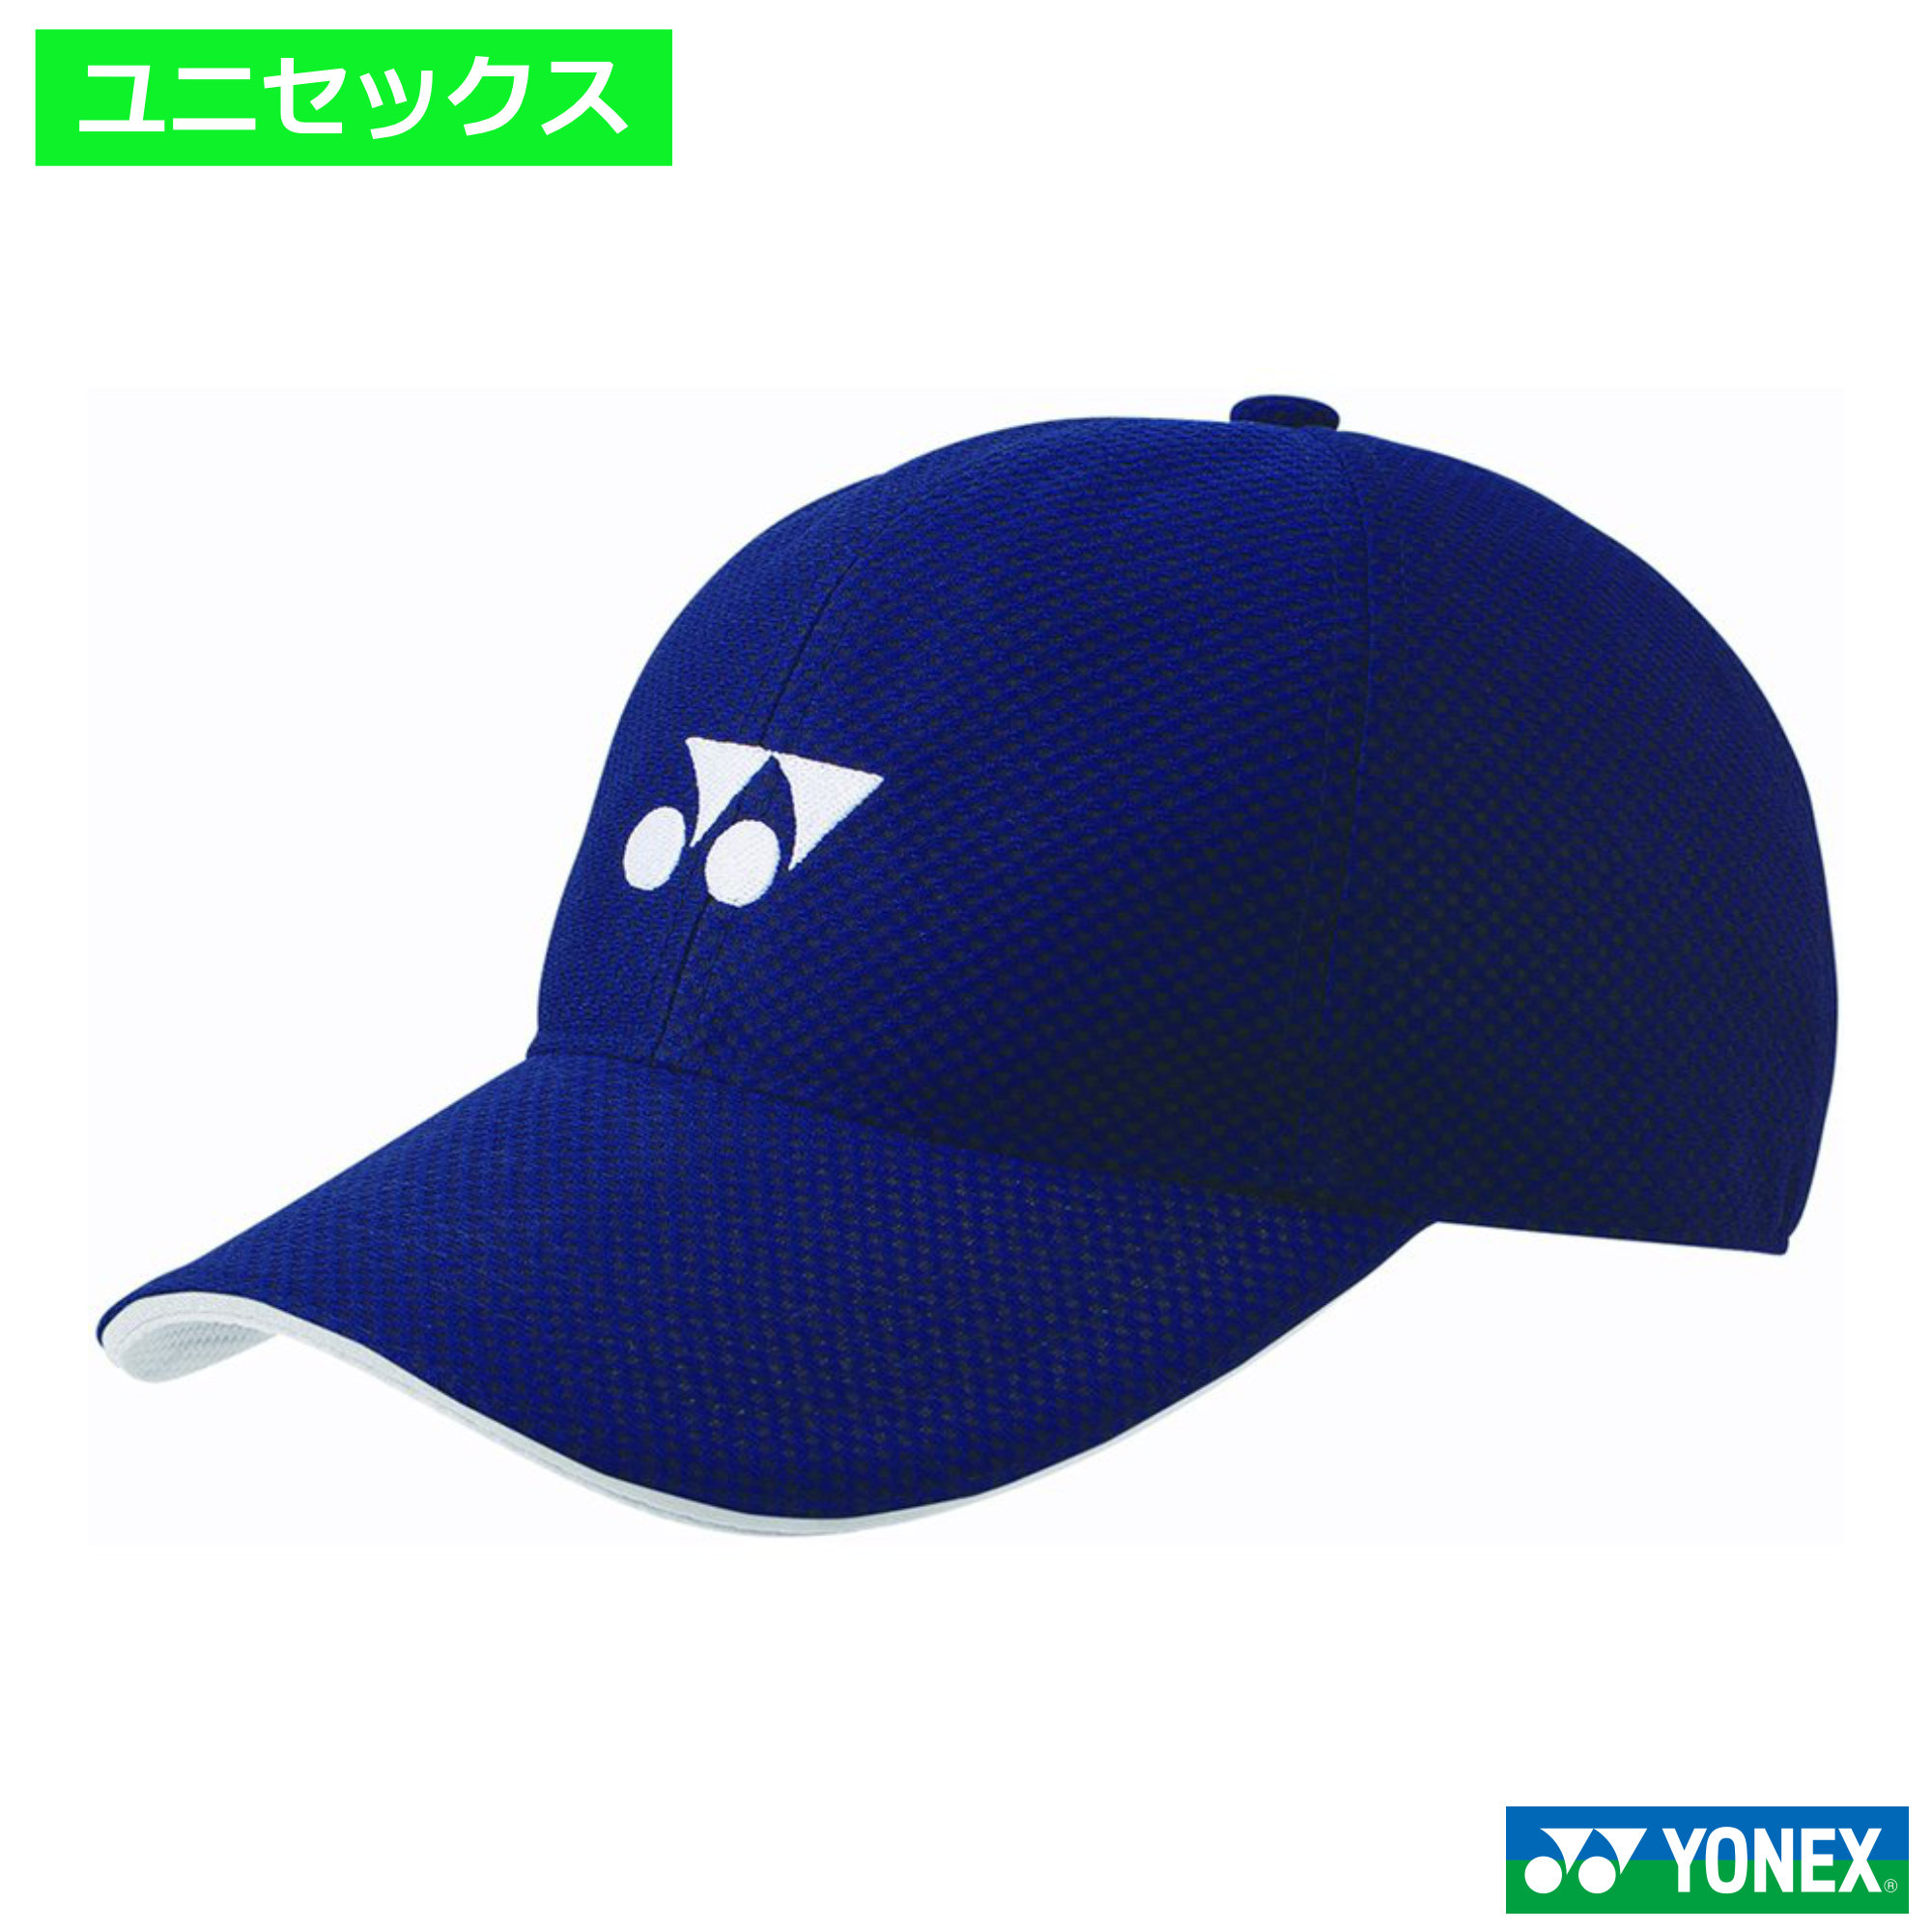 SALE／102%OFF】 ヨネックス キャップ 帽子 ヨネックス杯 限定 YONEX CUP 水色